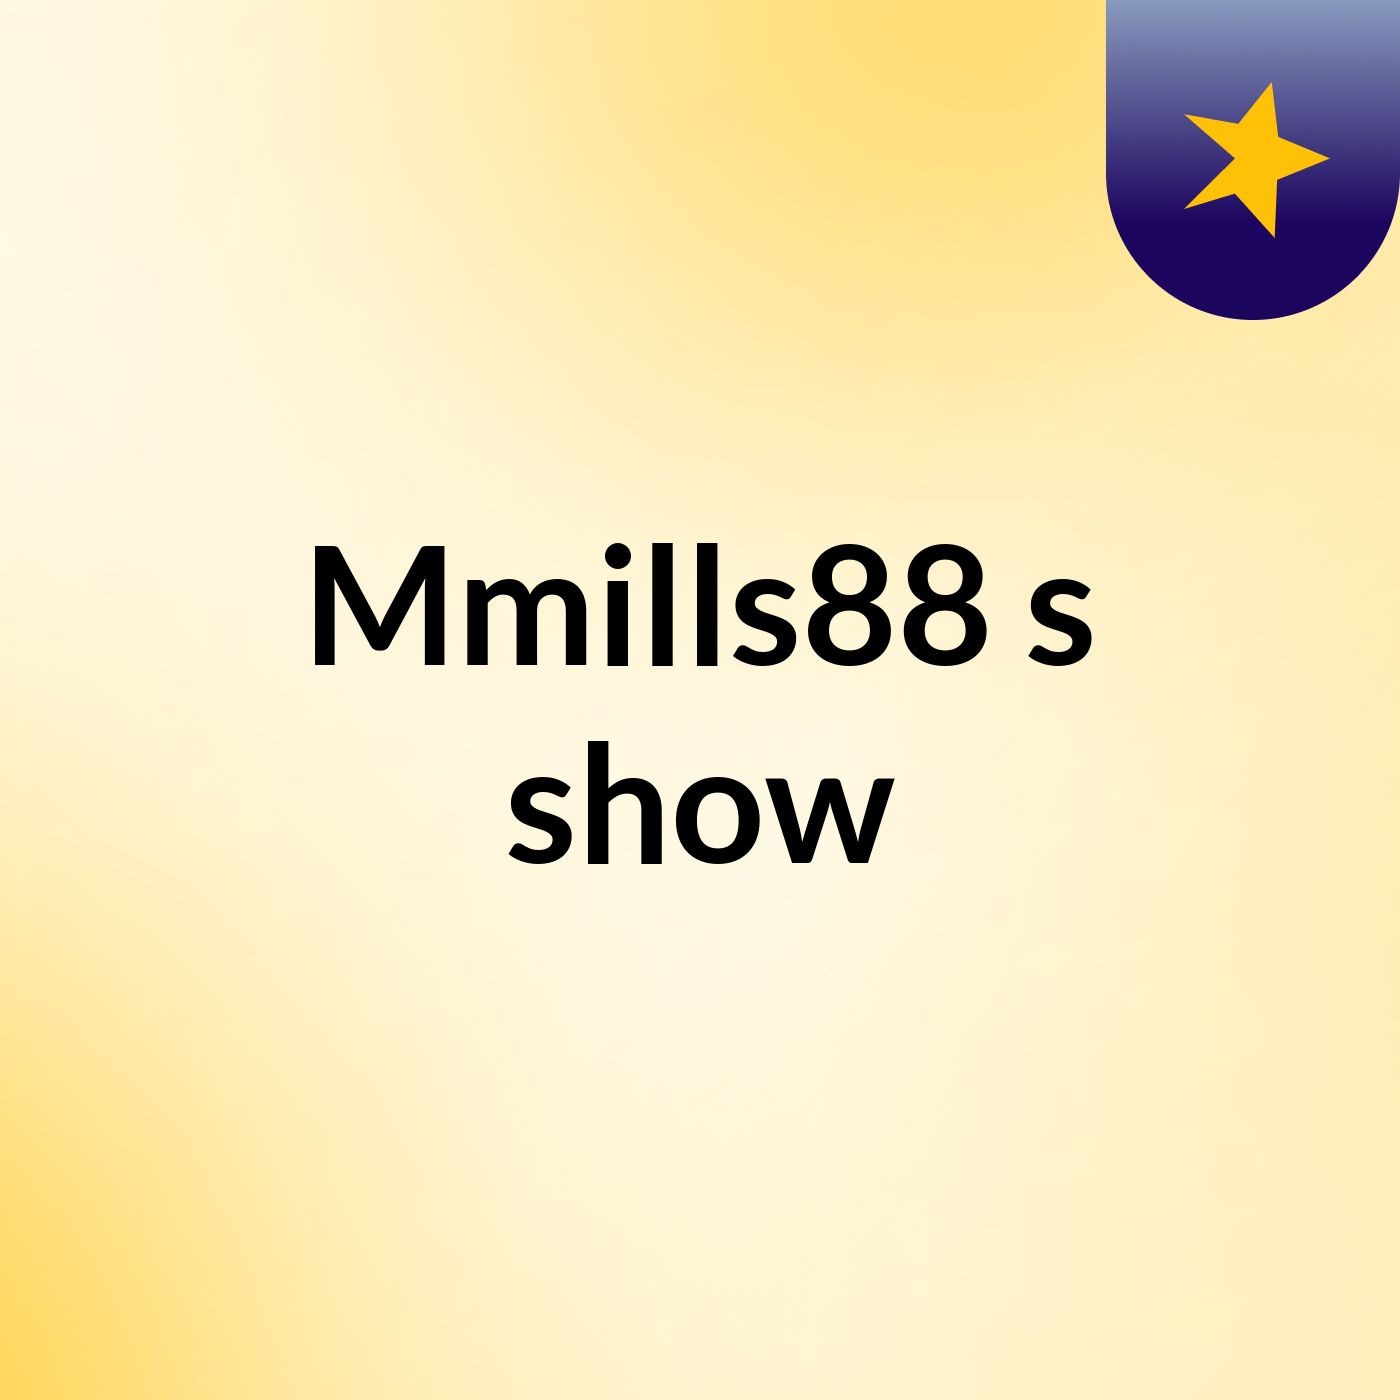 Mmills88's show